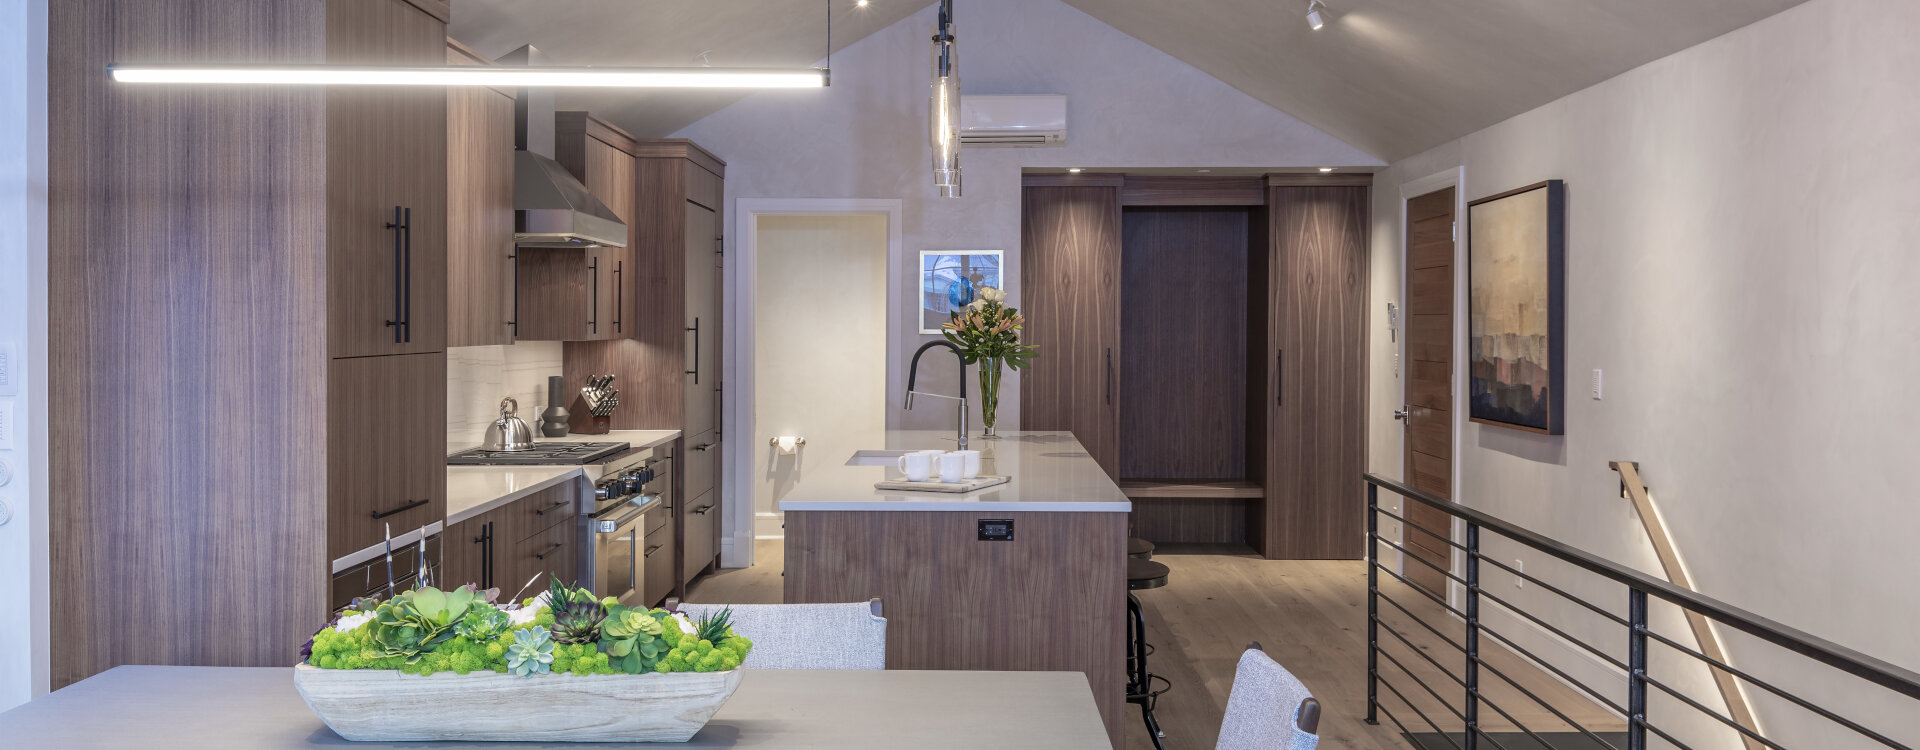 4.01-telluride-oak-at-the-gondola-dining-room-kitchen